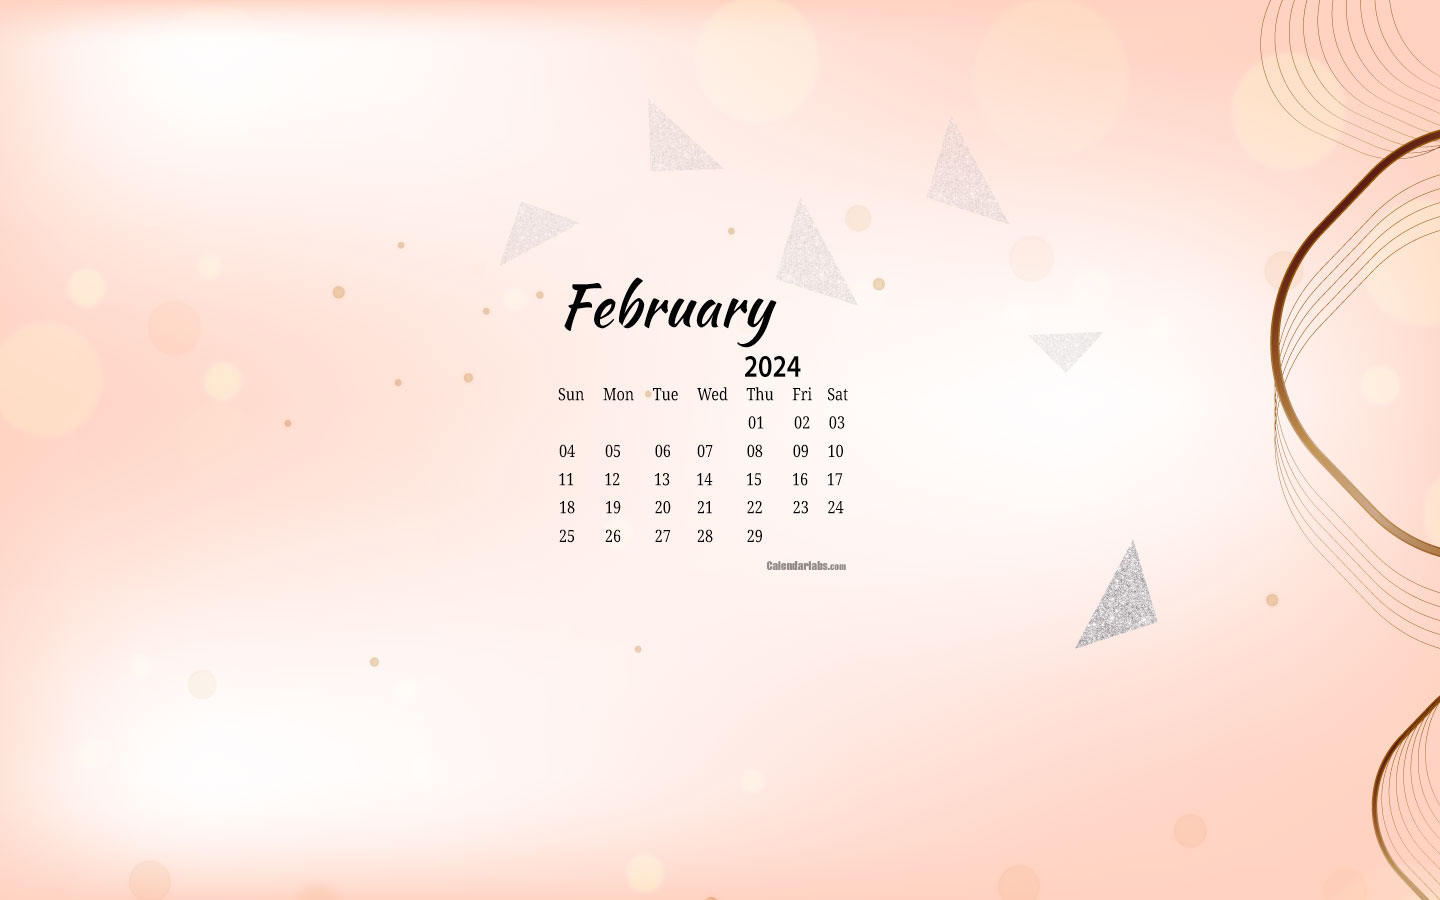 February 2024 Desktop Wallpaper Calendar - Calendarlabs | Calendar Labs Printable Calendar 2024